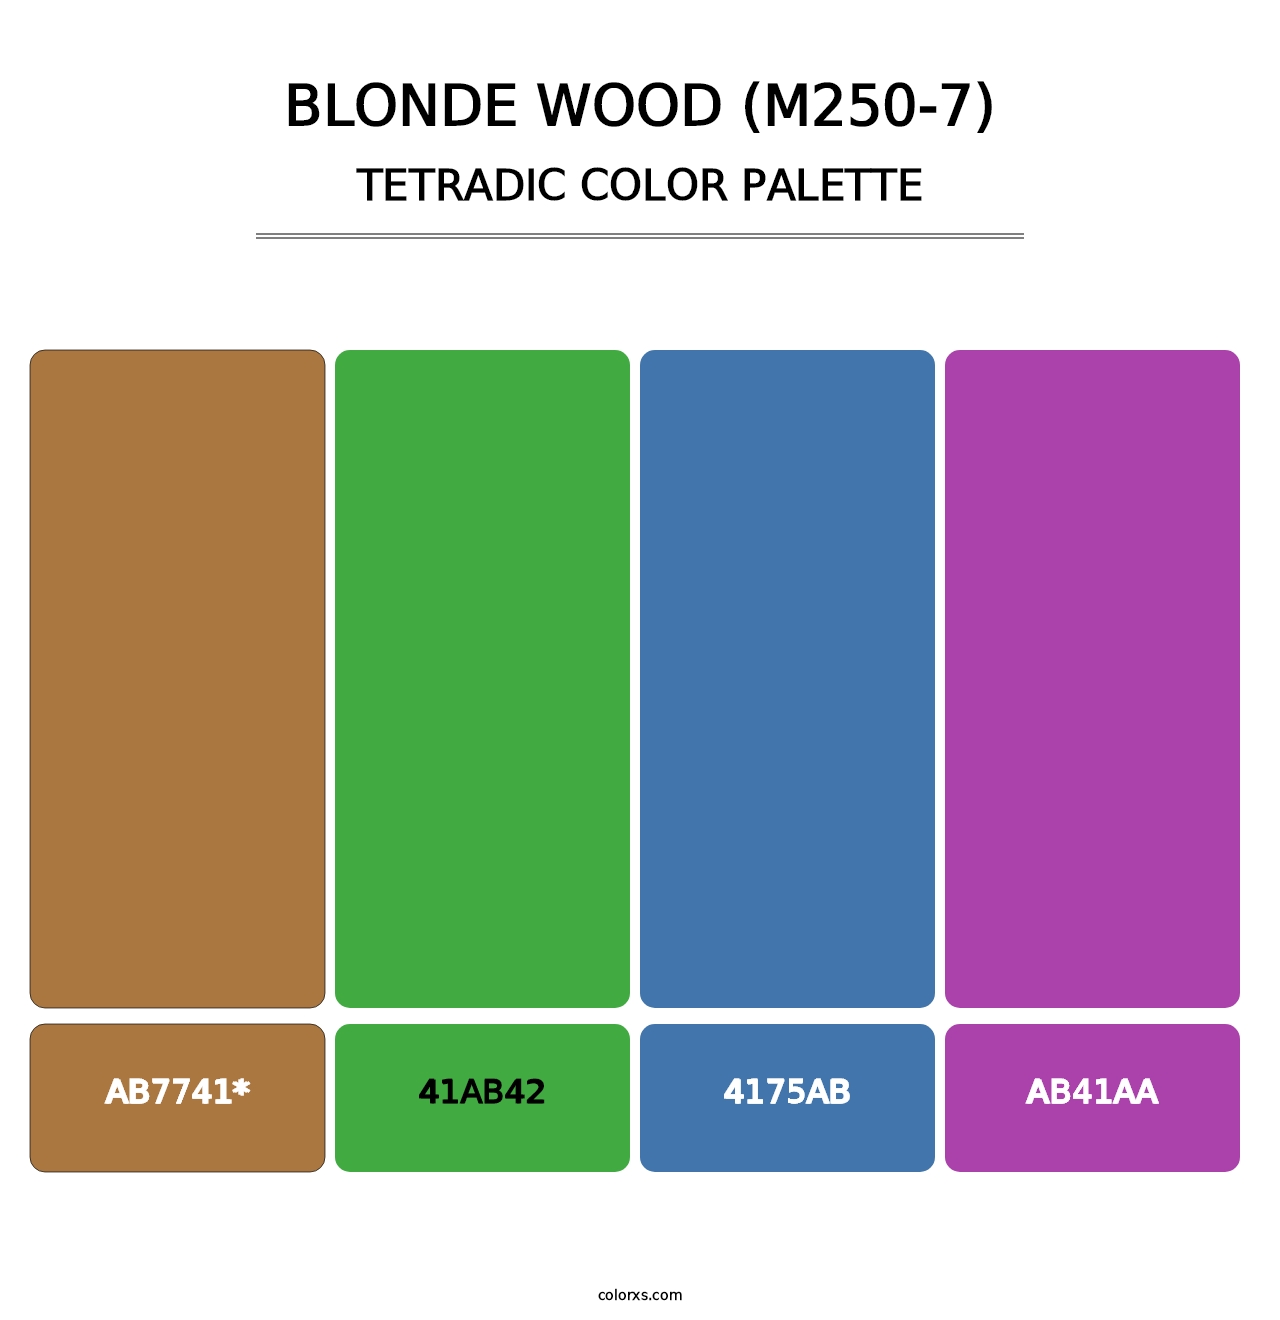 Blonde Wood (M250-7) - Tetradic Color Palette